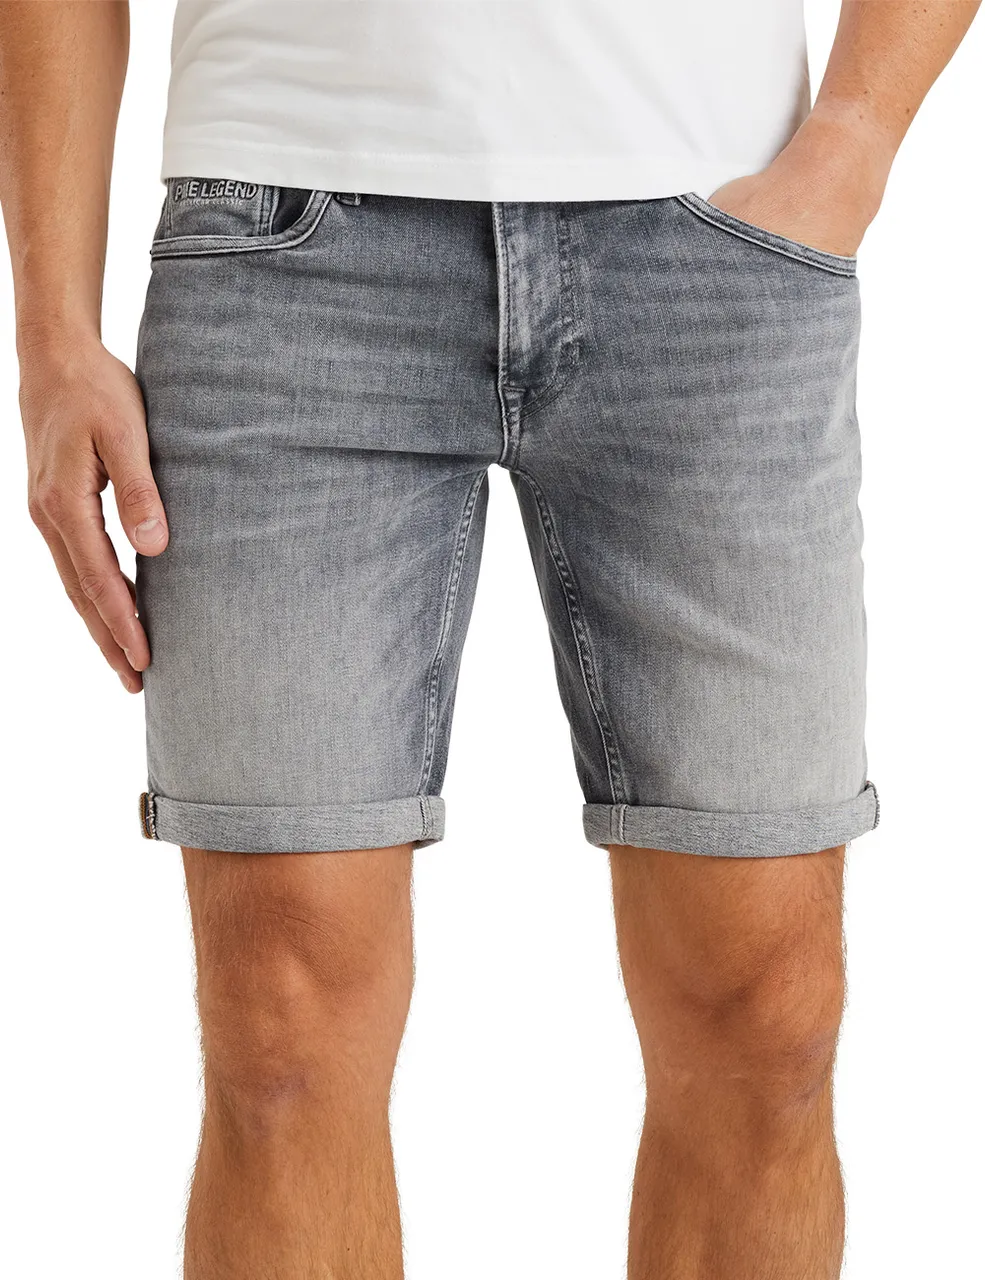 PME Legend Herren Jeans Short NIGHTFLIGHT - Regular Fit - Blau - Grau